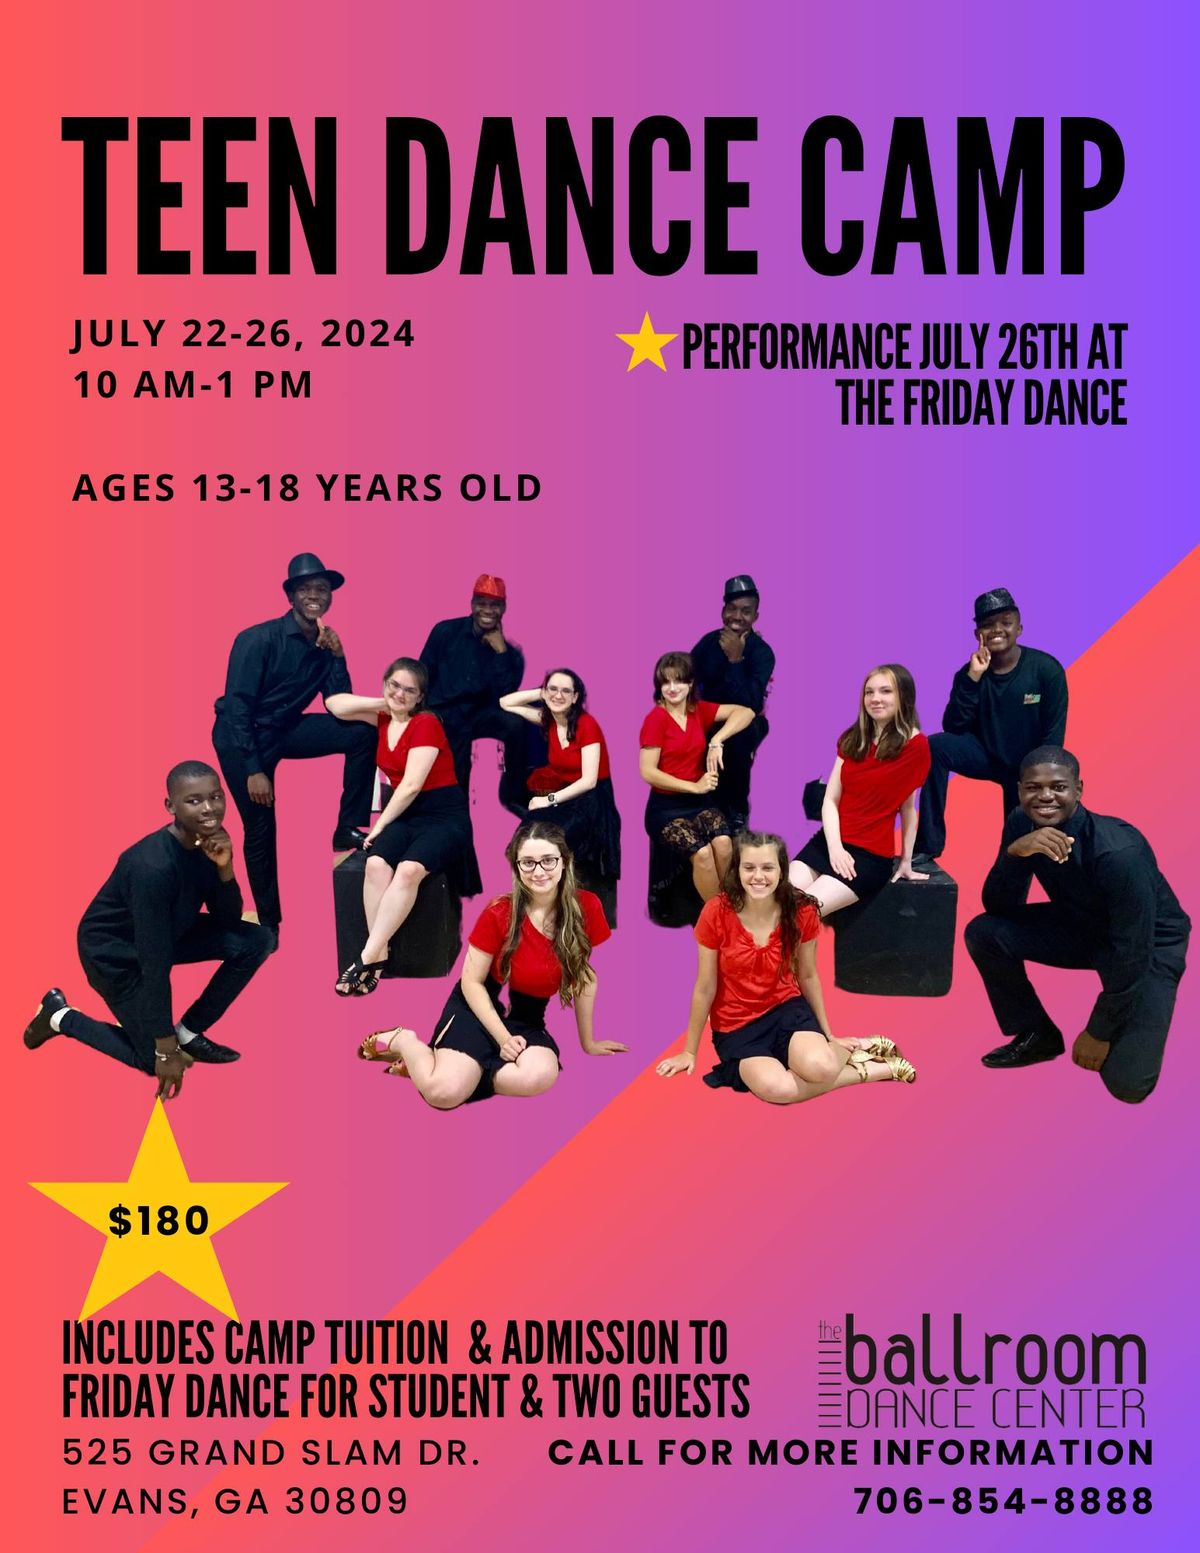 Teen Dance Camp